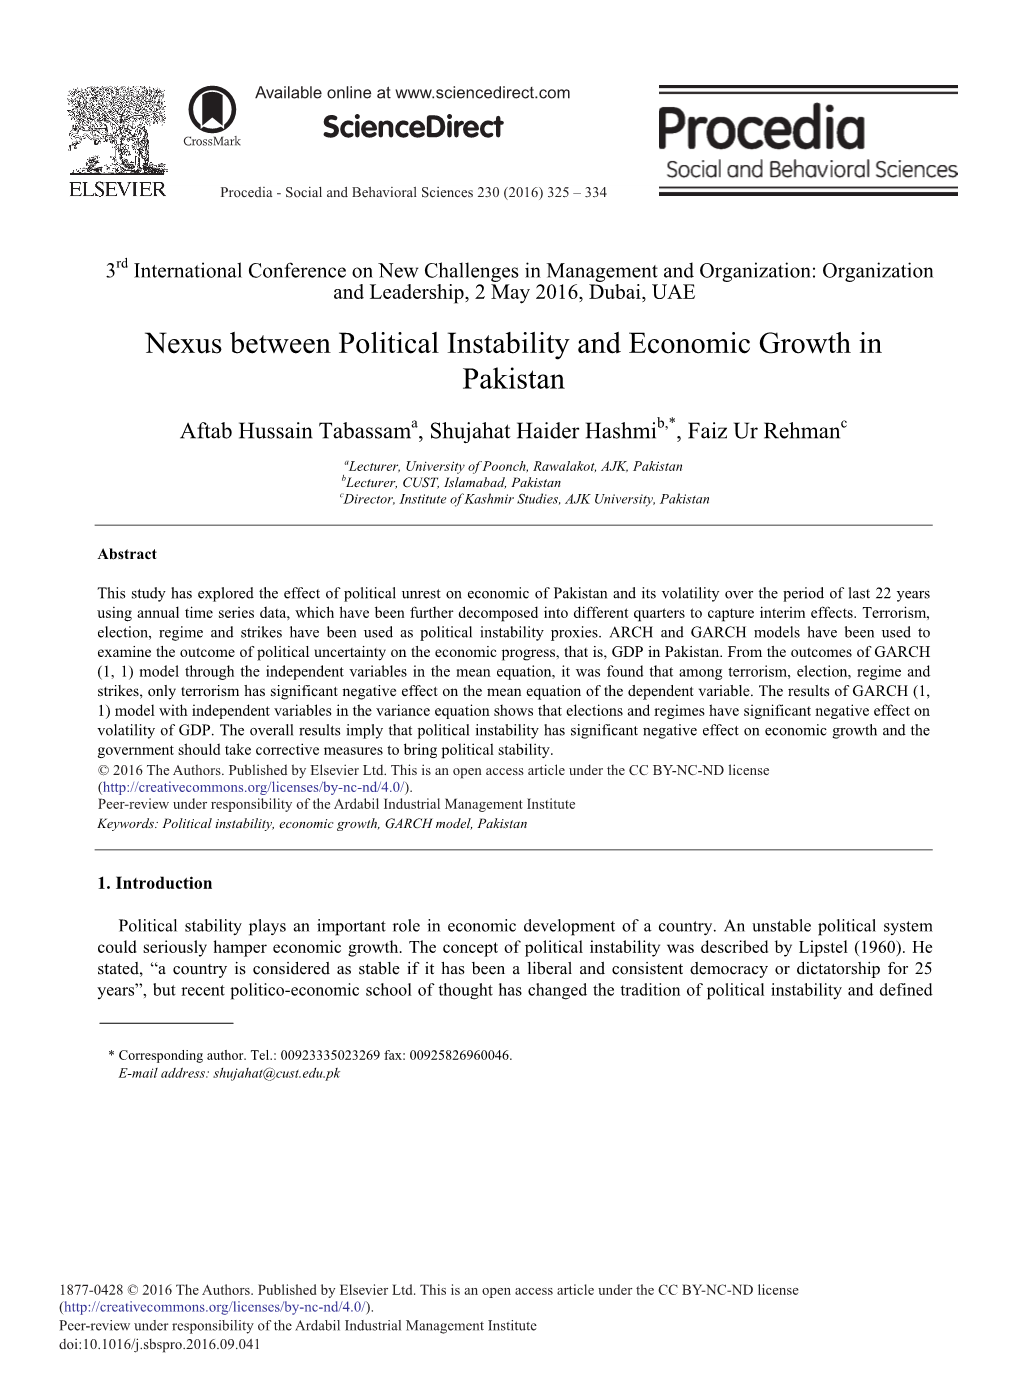 Nexus Between Political Instability and Economic Growth in Pakistan